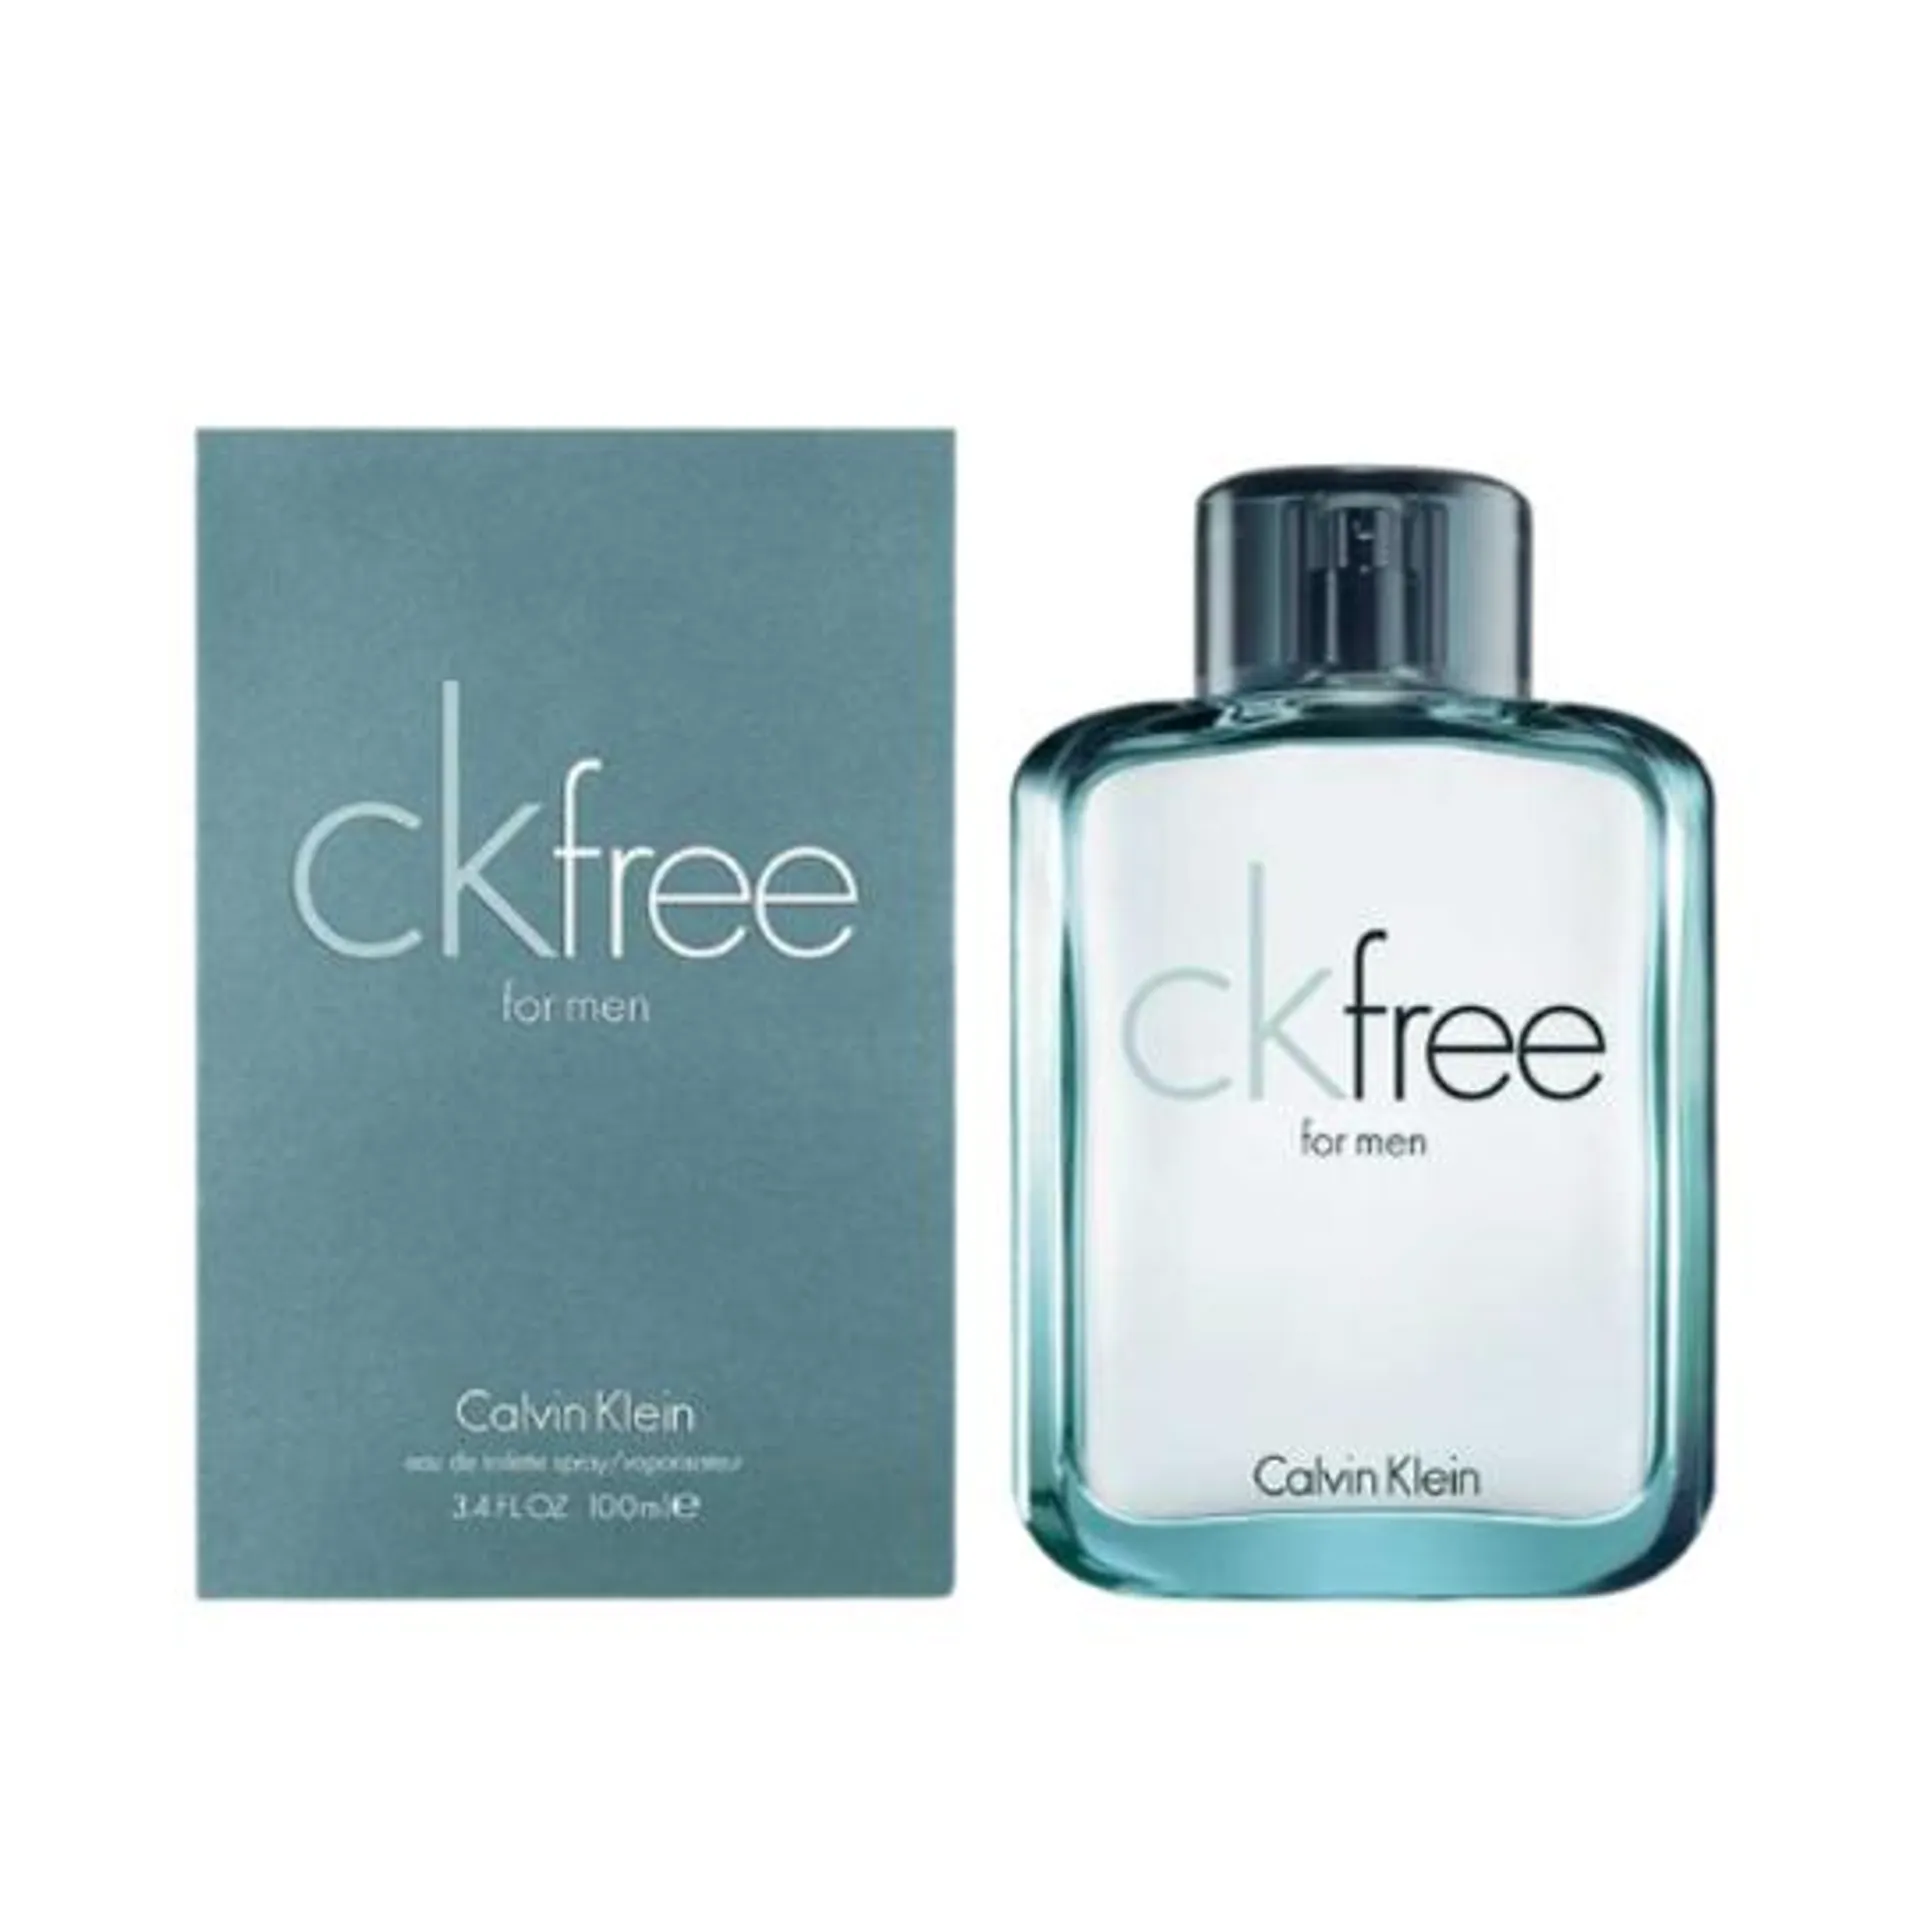 Perfume Ck Free For Men Masculino 100ml Eau de Toilette Spray